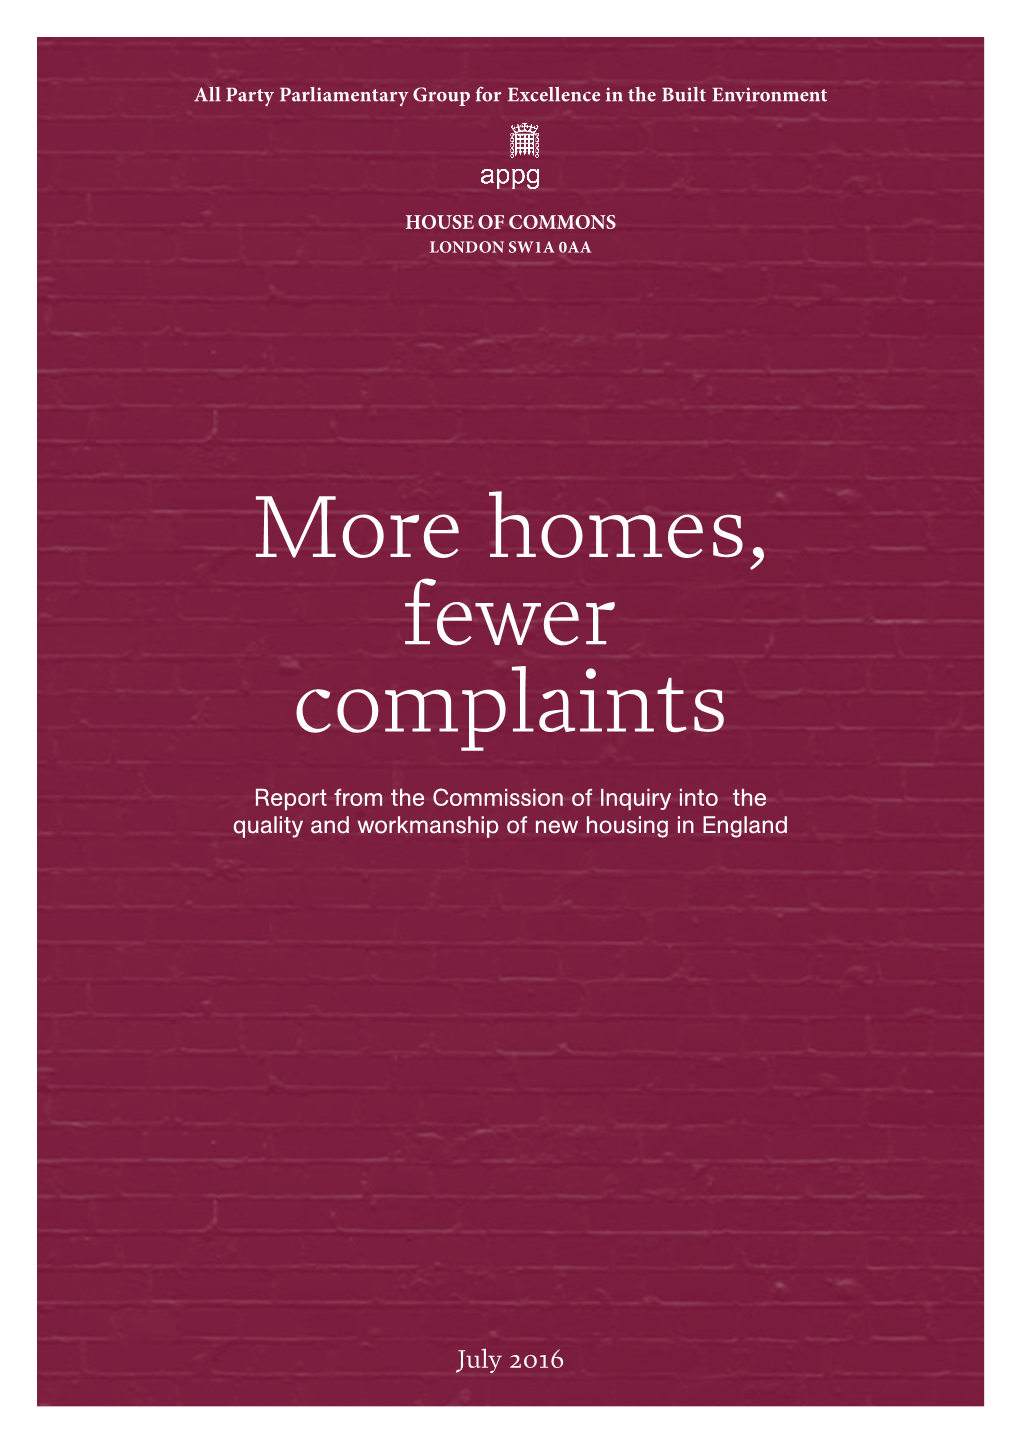 More Homes, Fewer Complaints